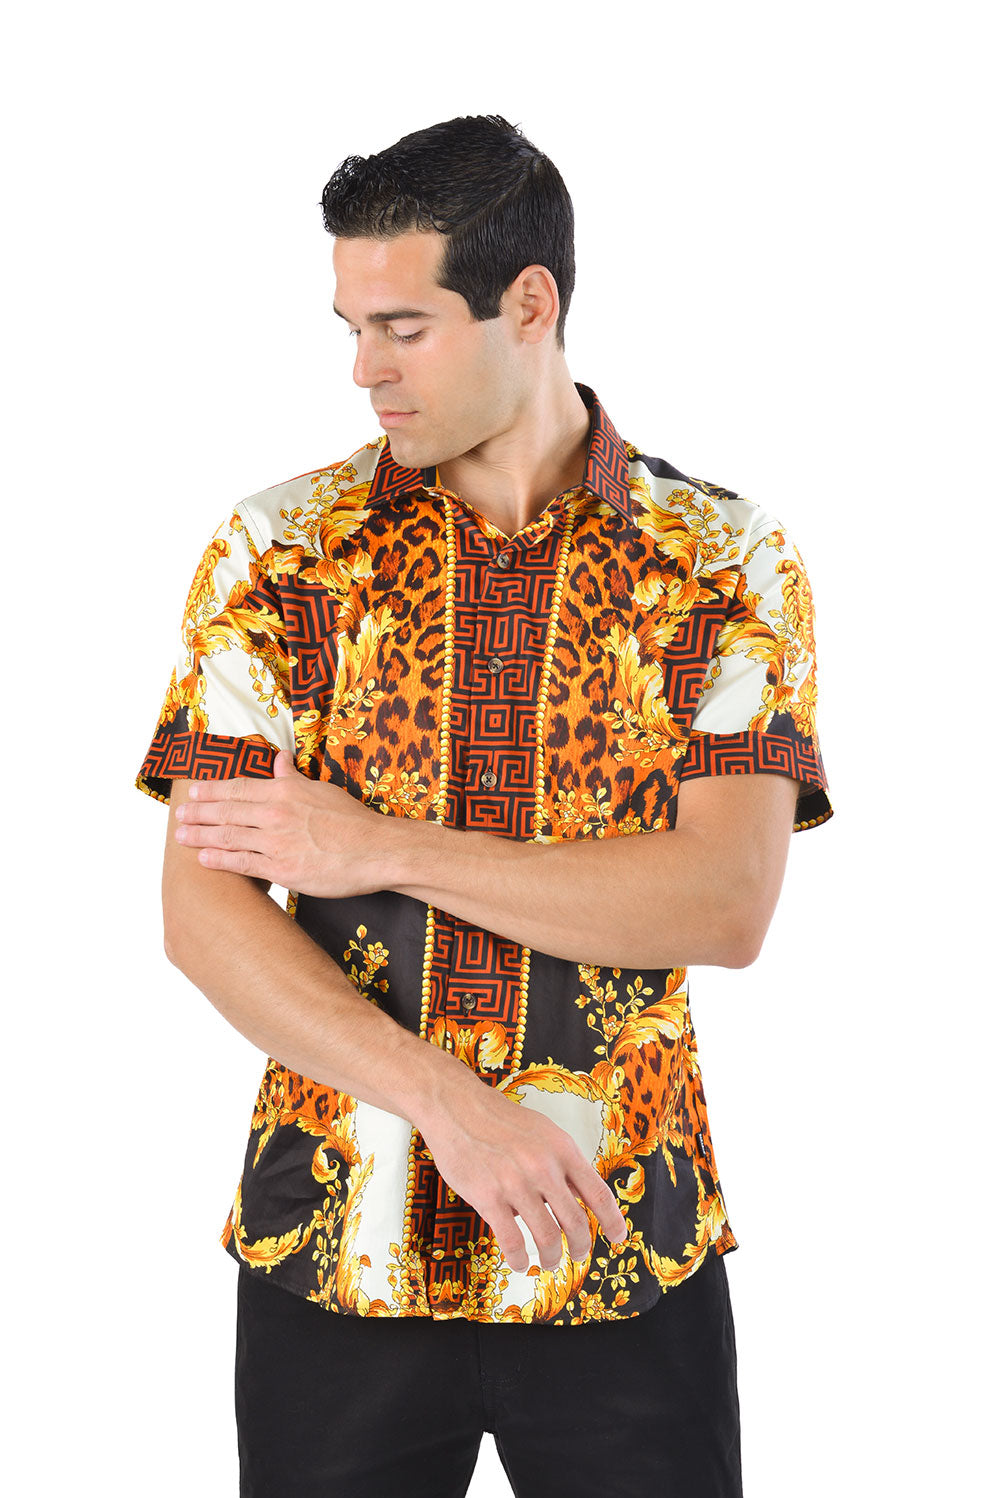 BARABAS Men's Medusa Greek Pattern Leopard Short Sleeve Shirt SS01 Gold